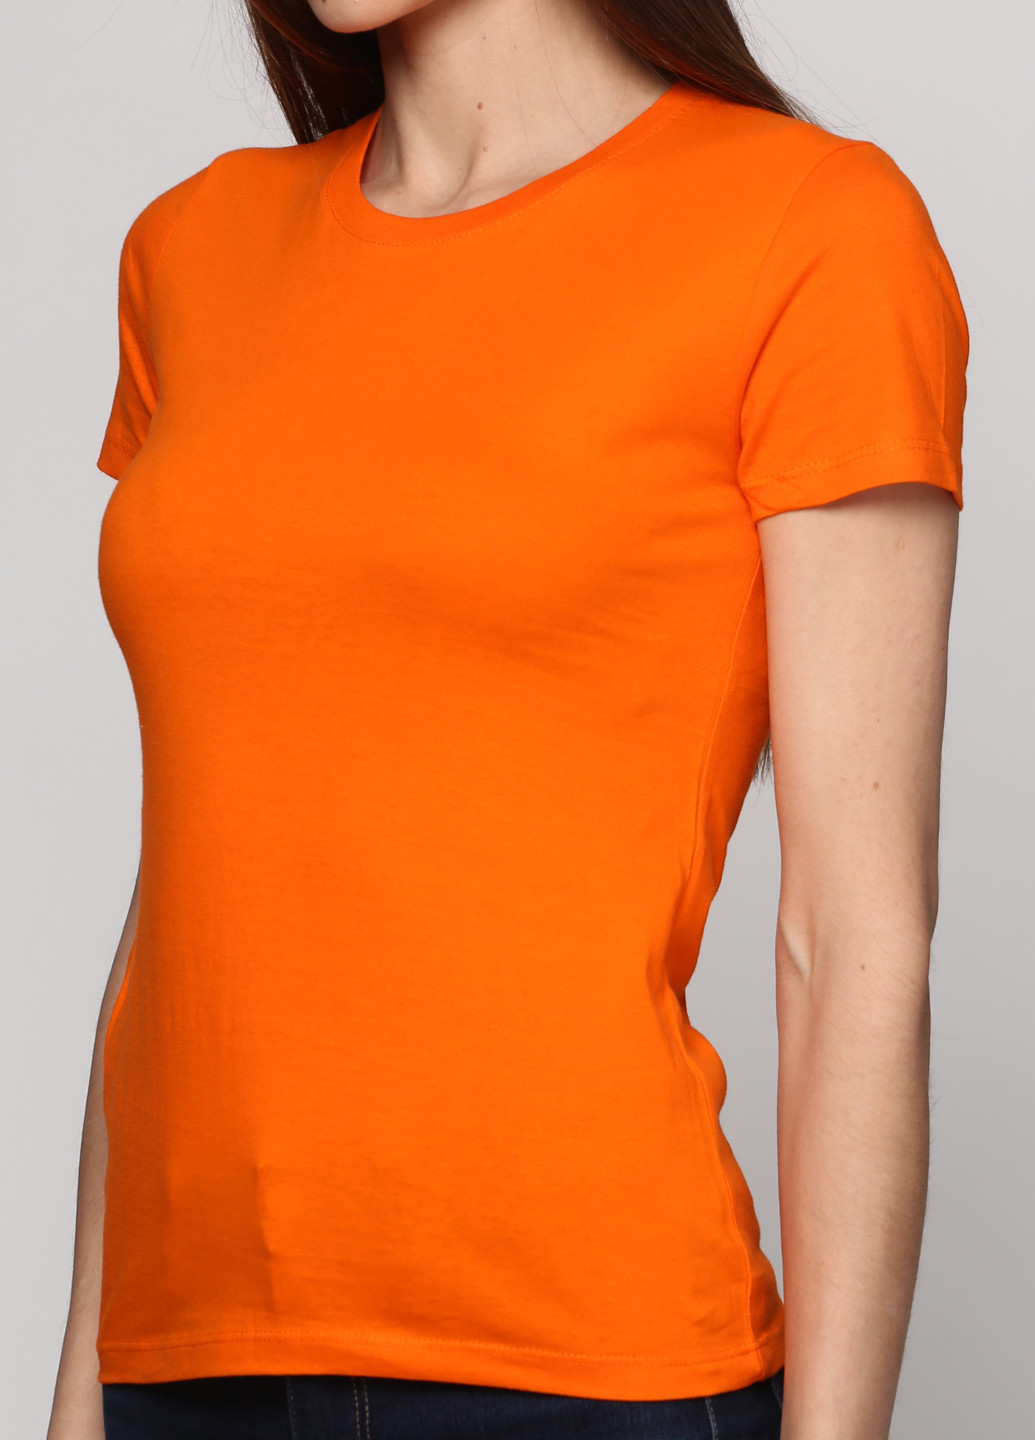 Оранжевая летняя футболка с коротким рукавом Sol's